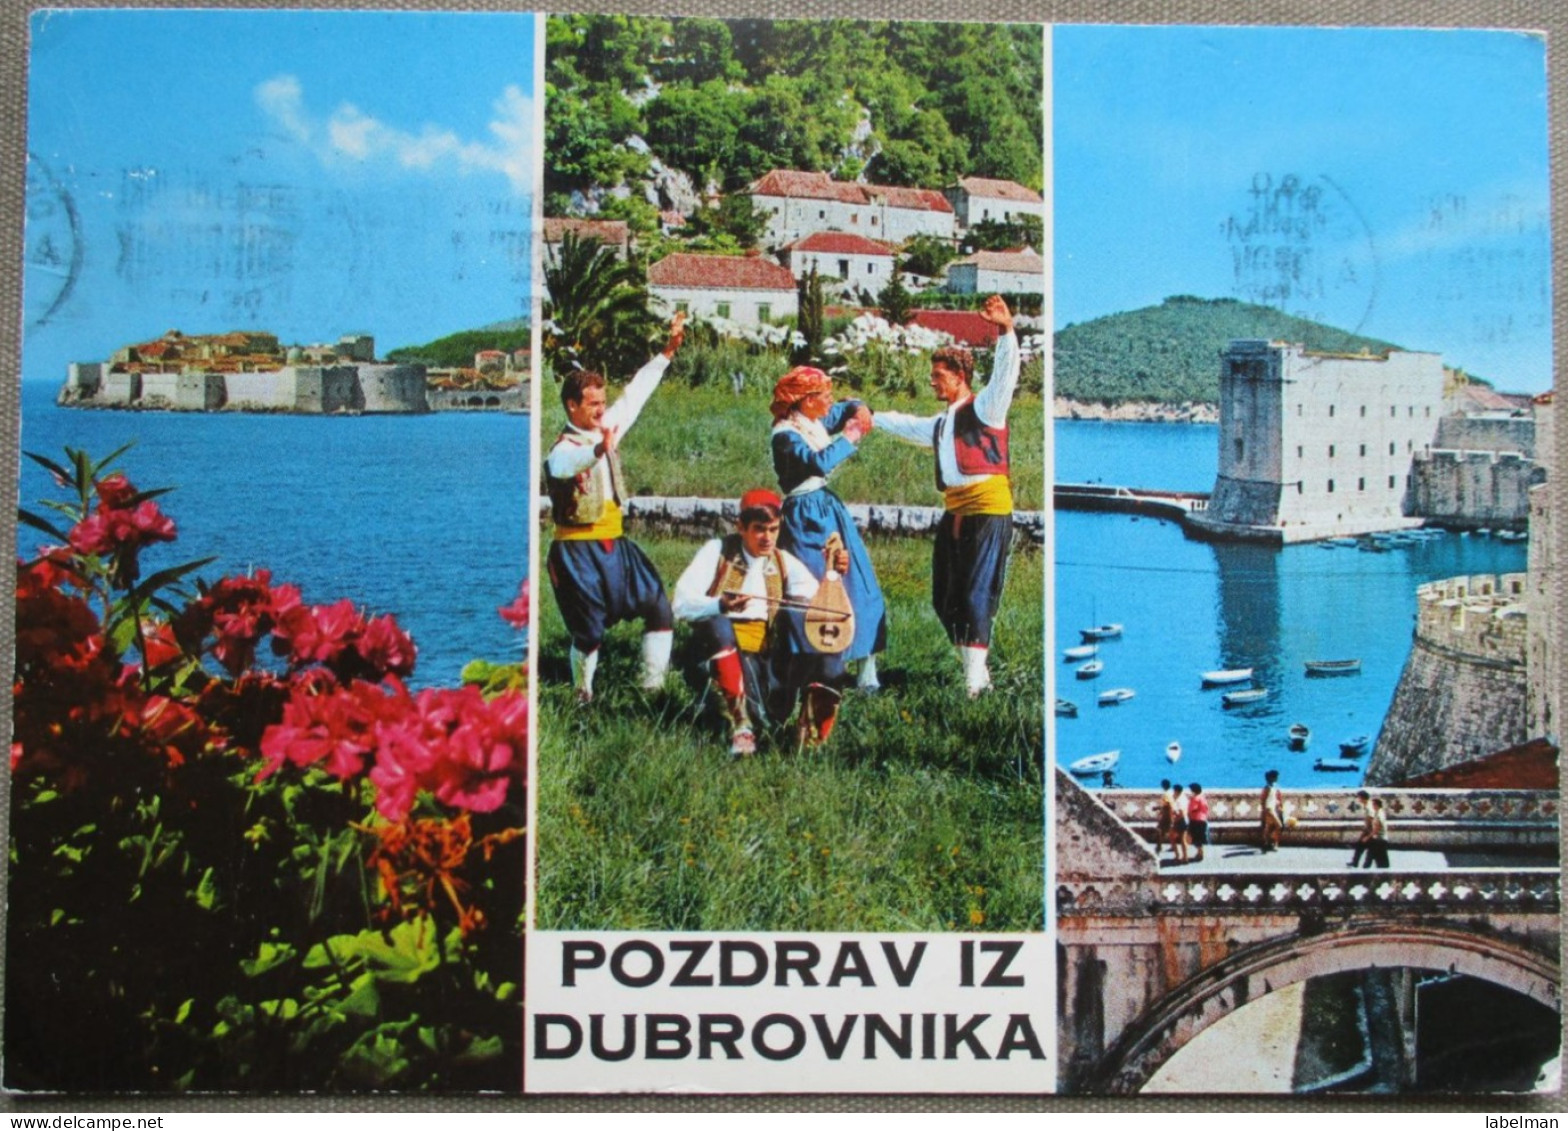 CROATIA DOVROBNIK JUGOSLAVIA POSTCARD CARTOLINA ANSICHTSKARTE CARTE POSTALE POSTKARTE CARD KARTE - Etiquetas De Hotel